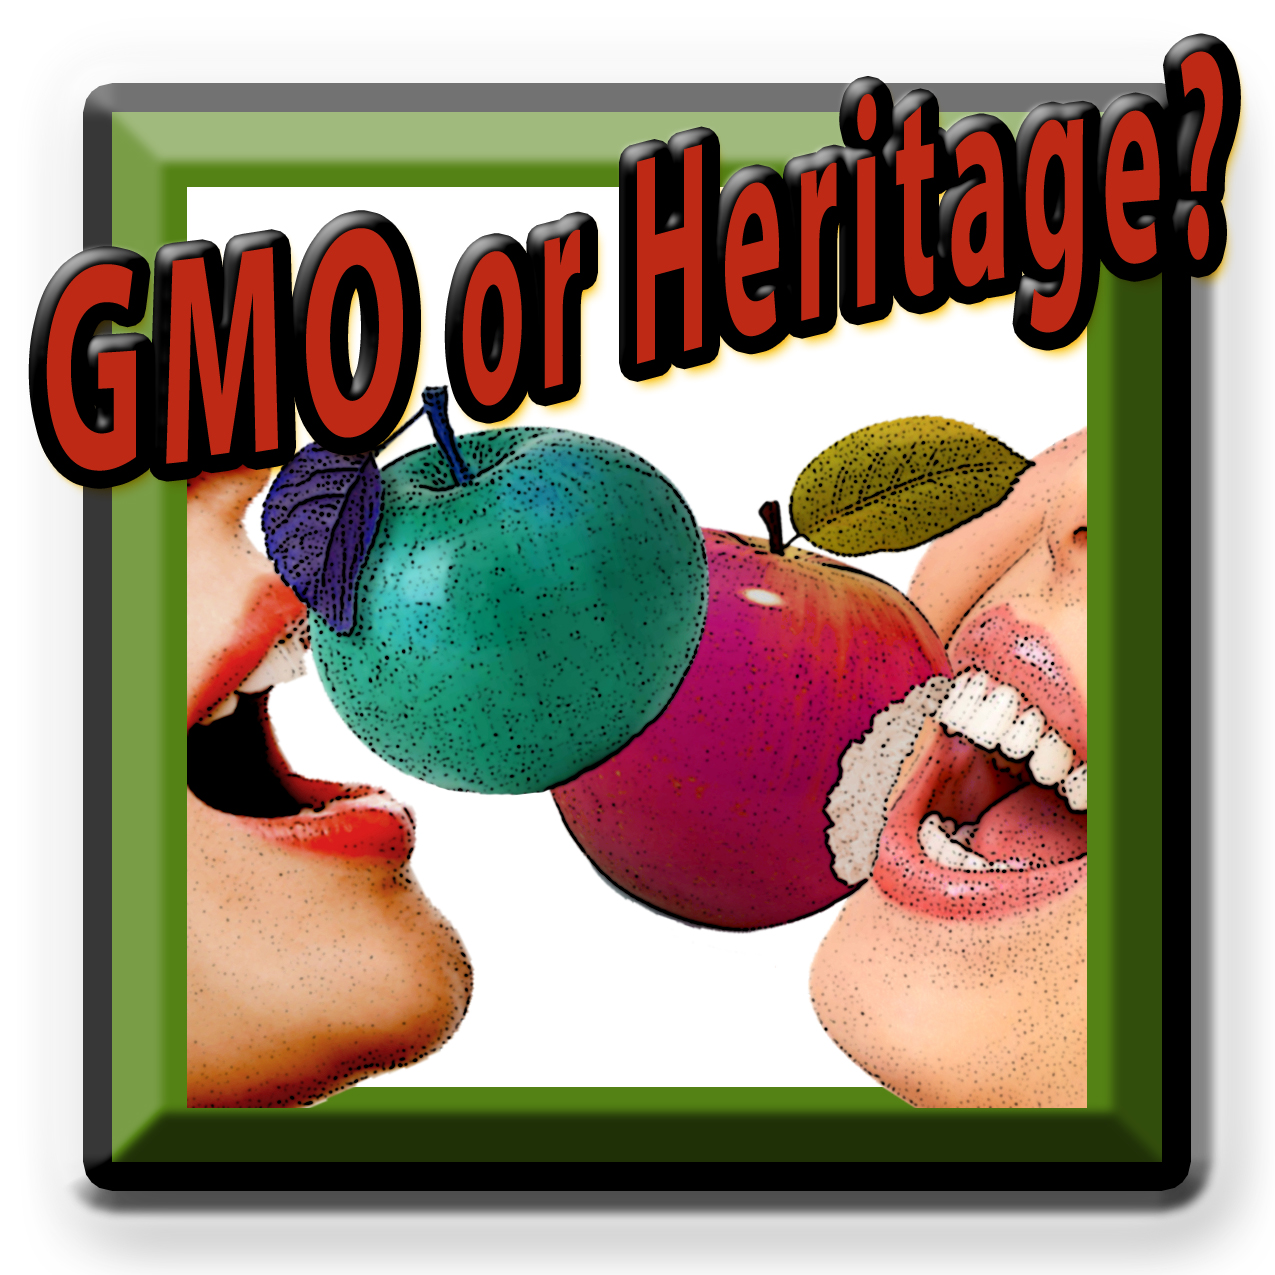 GMO Apples or Heritage Apples? Food Chain Radio with host Michael Olson and guest Farmer & Organic Pioneer, Amigo Bob Cantisano